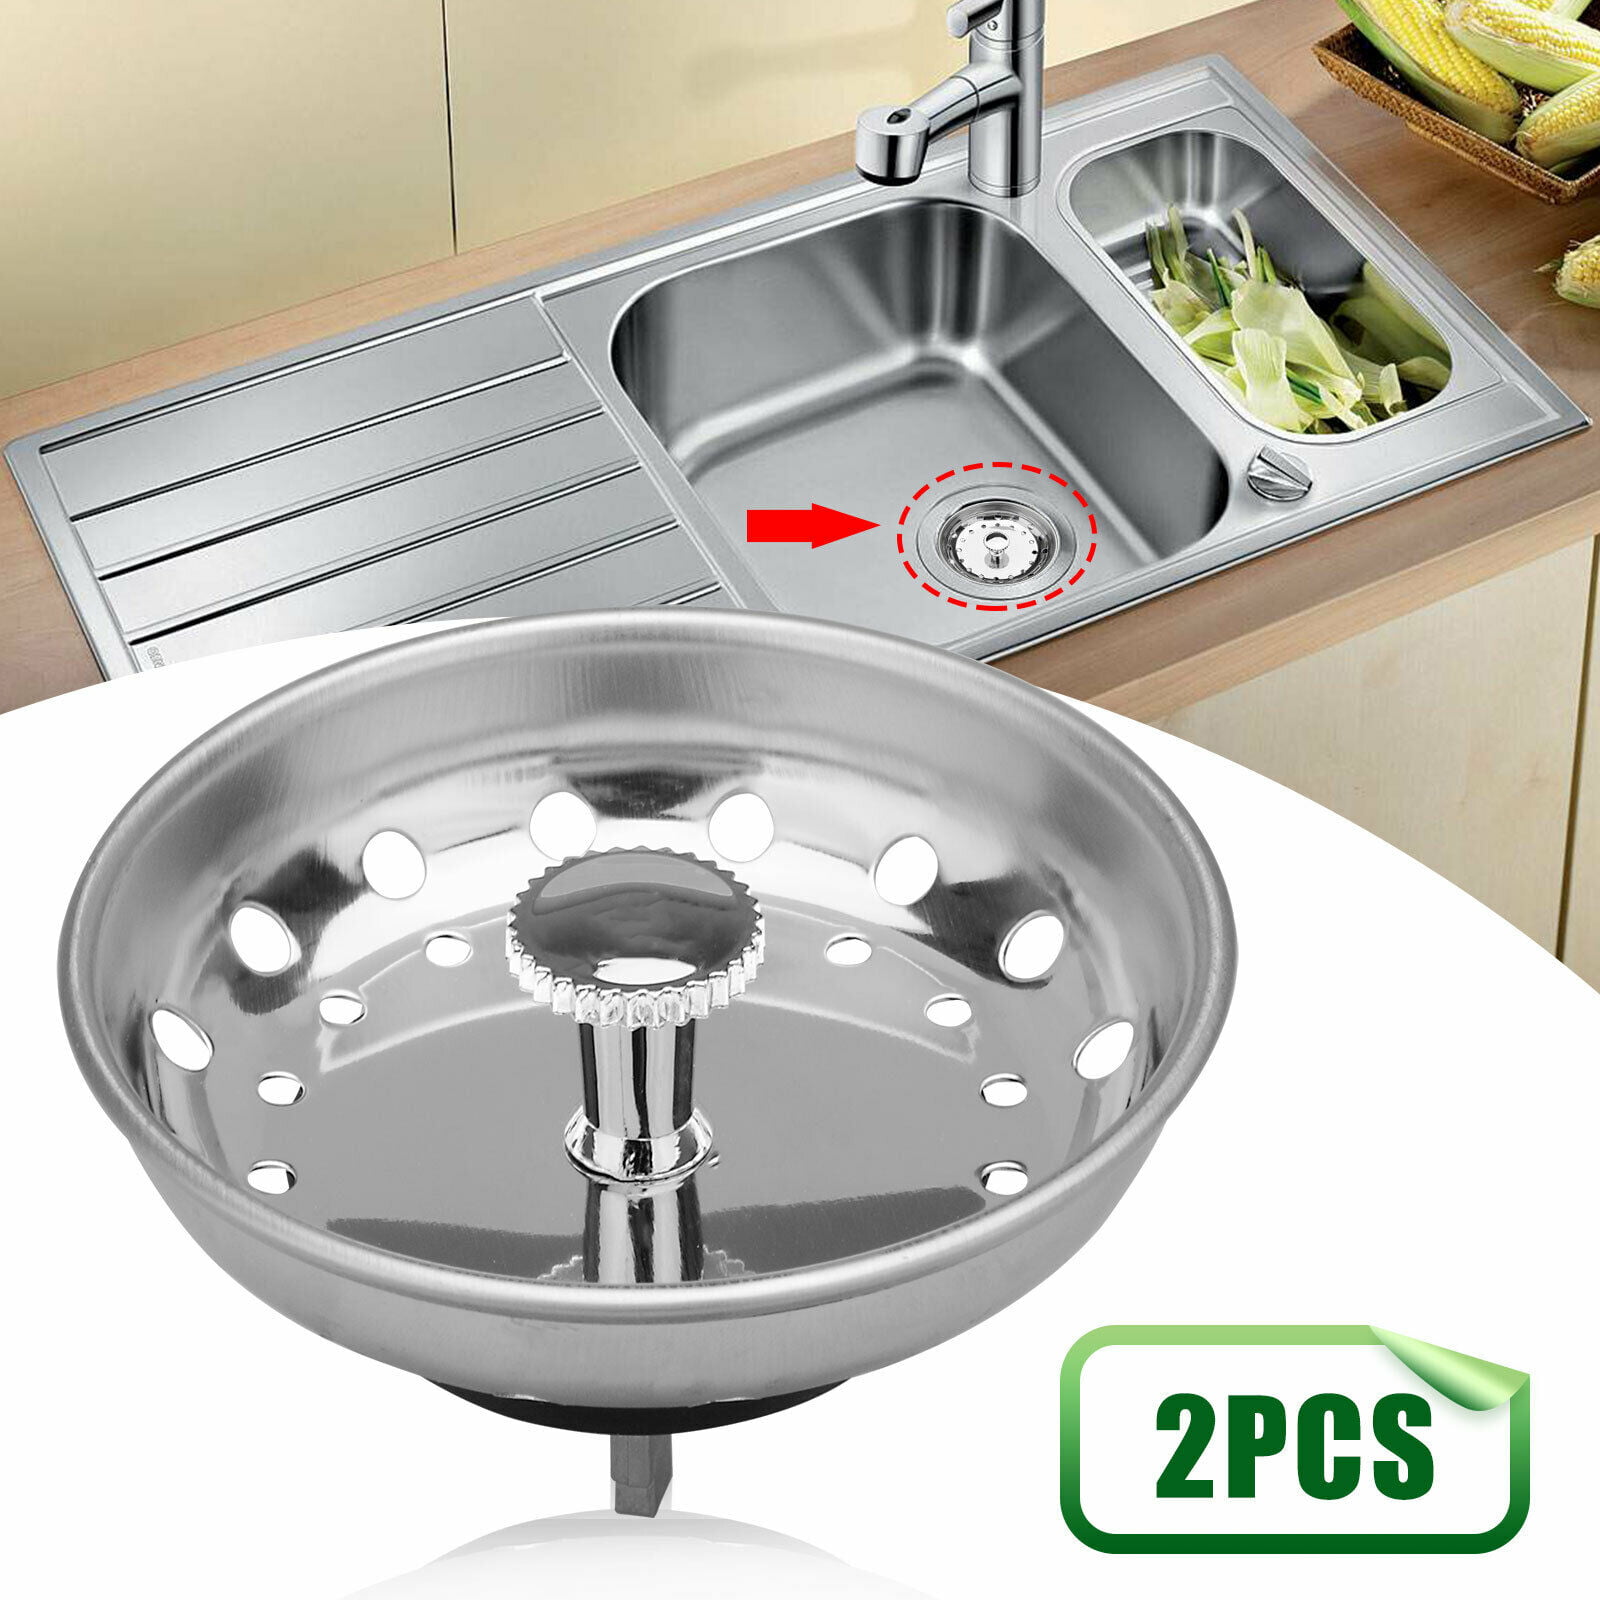 2pcs Stainless Steel Home Kitchen Sink Drain Stopper Basket Strainer Waste Plug